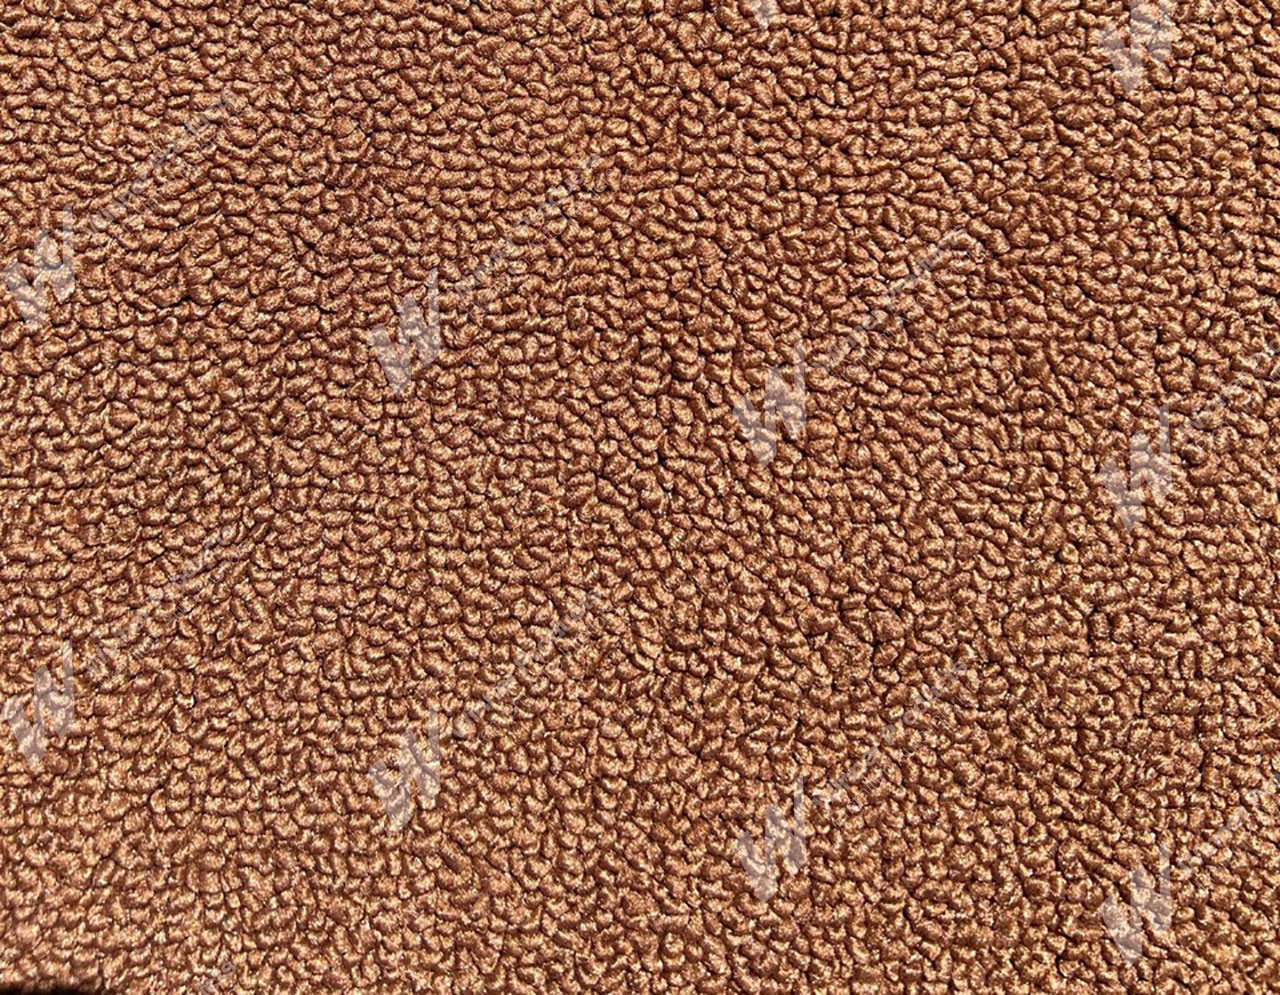 Holden Kingswood HX Kingswood Wagon 67V Tan Carpet (Image 1 of 1)